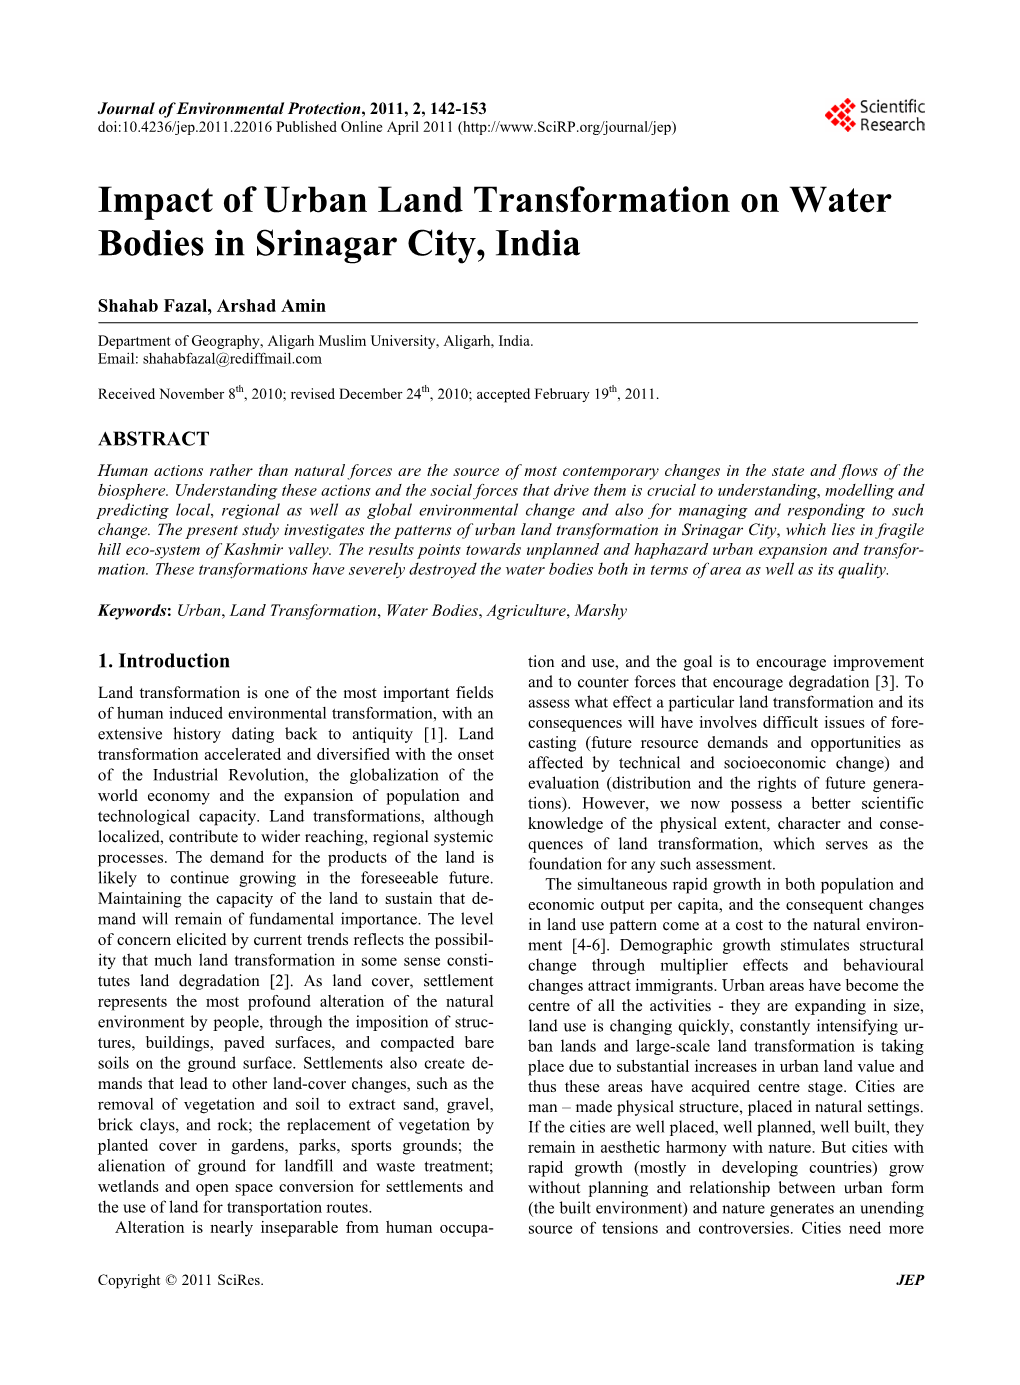 Impact of Urban Land Transformation on Water Bodies in Srinagar City, India